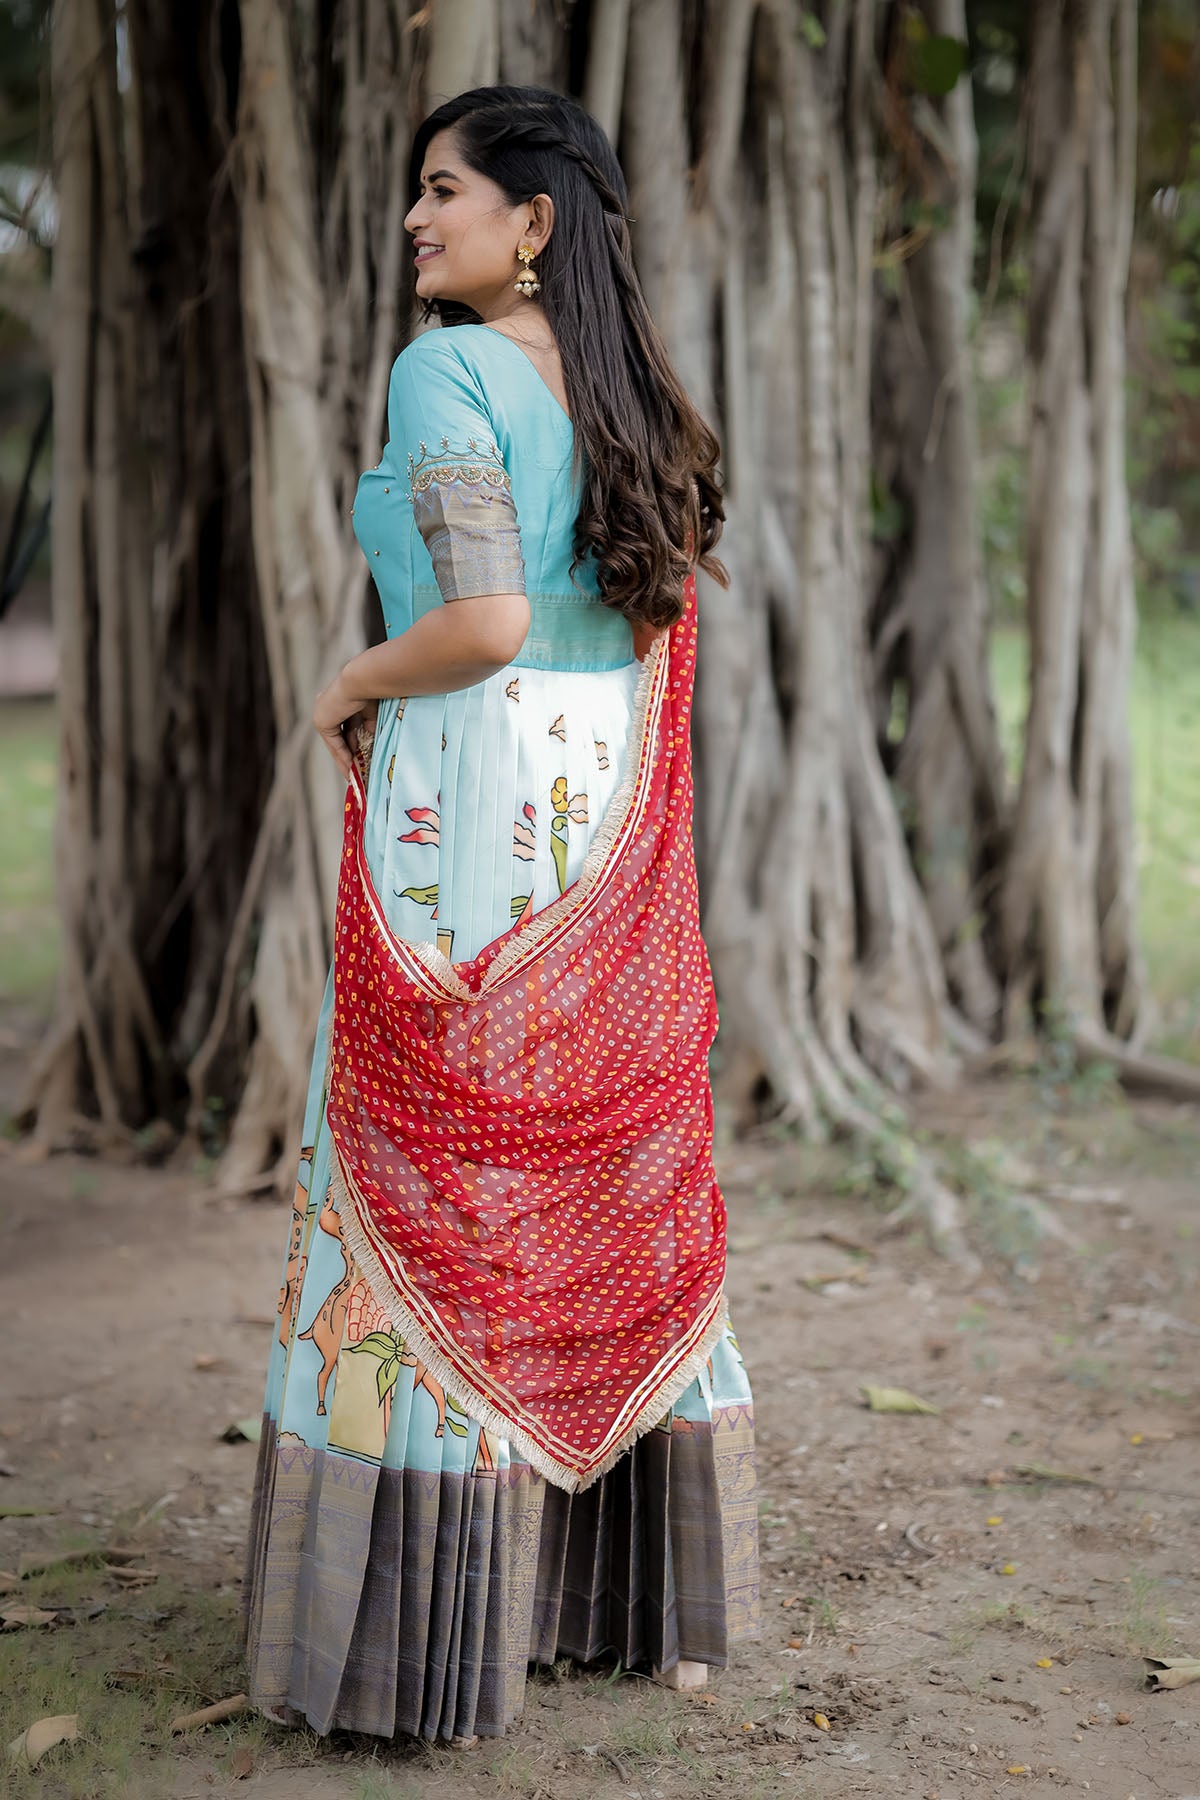 Powder blue kalamkari dress with red dupatta